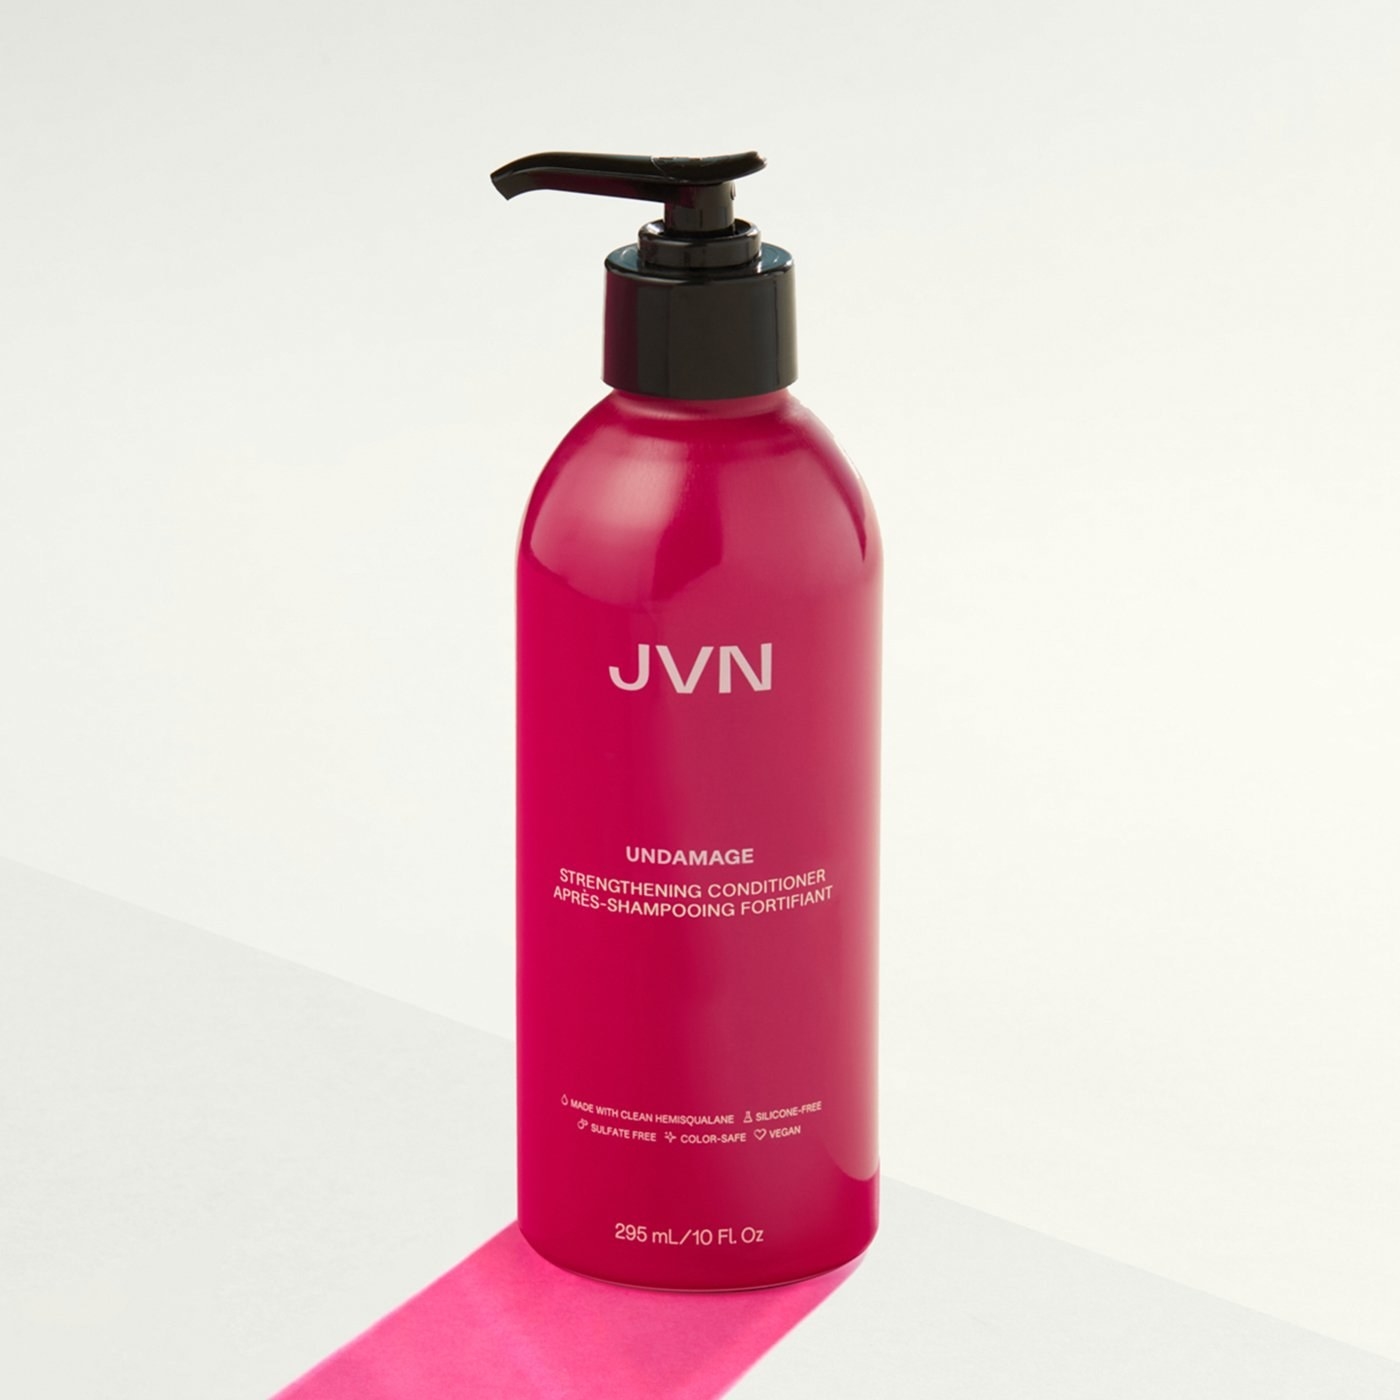 JVN Hair pink bottle of Strengthening Conditioner